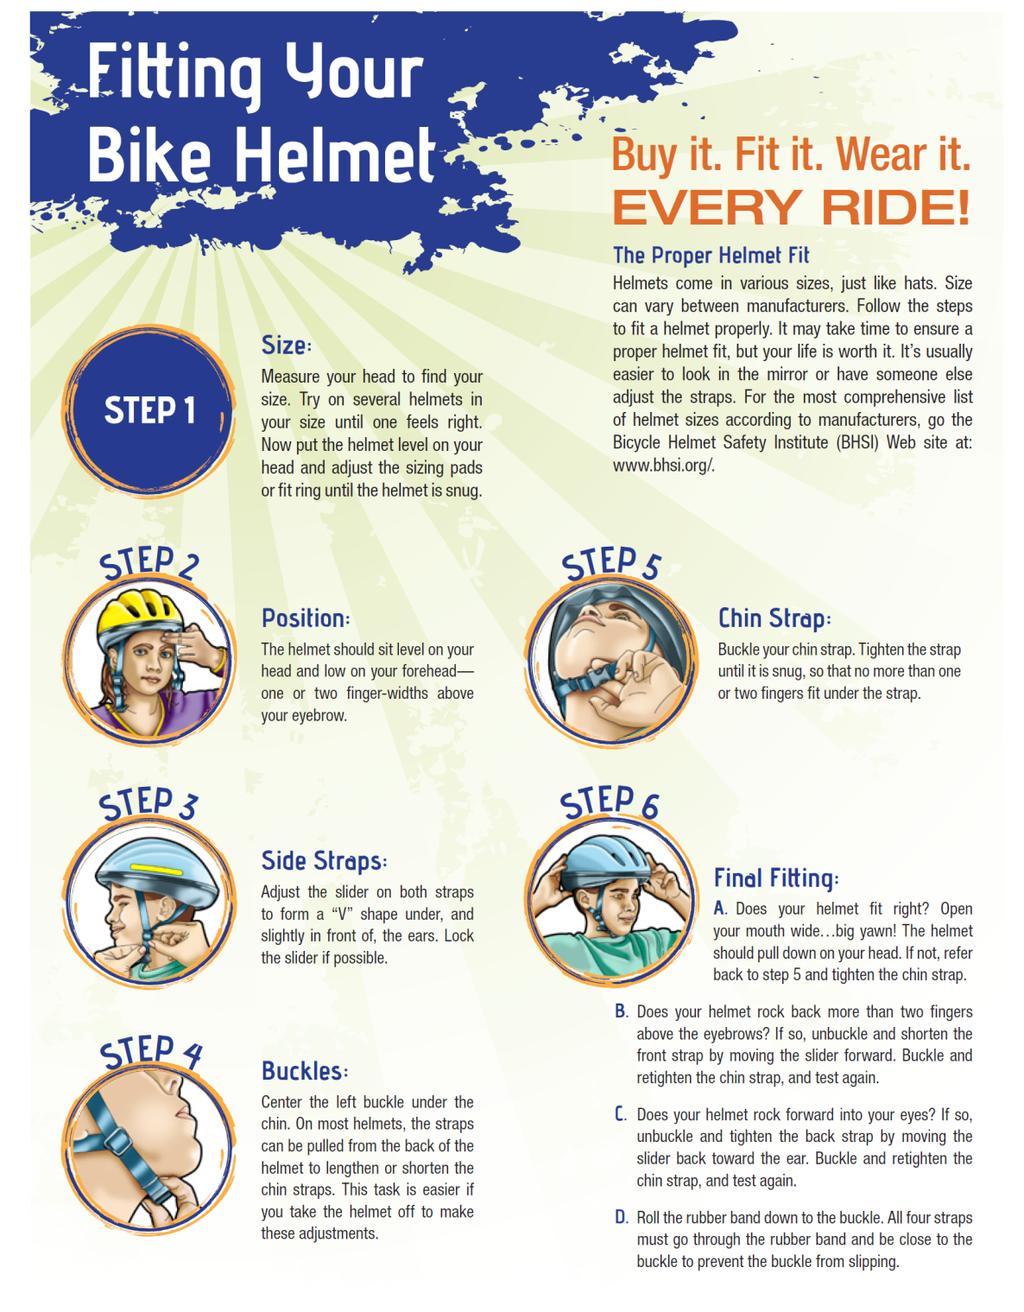 Fitting your Bike Helmet nhtsa.